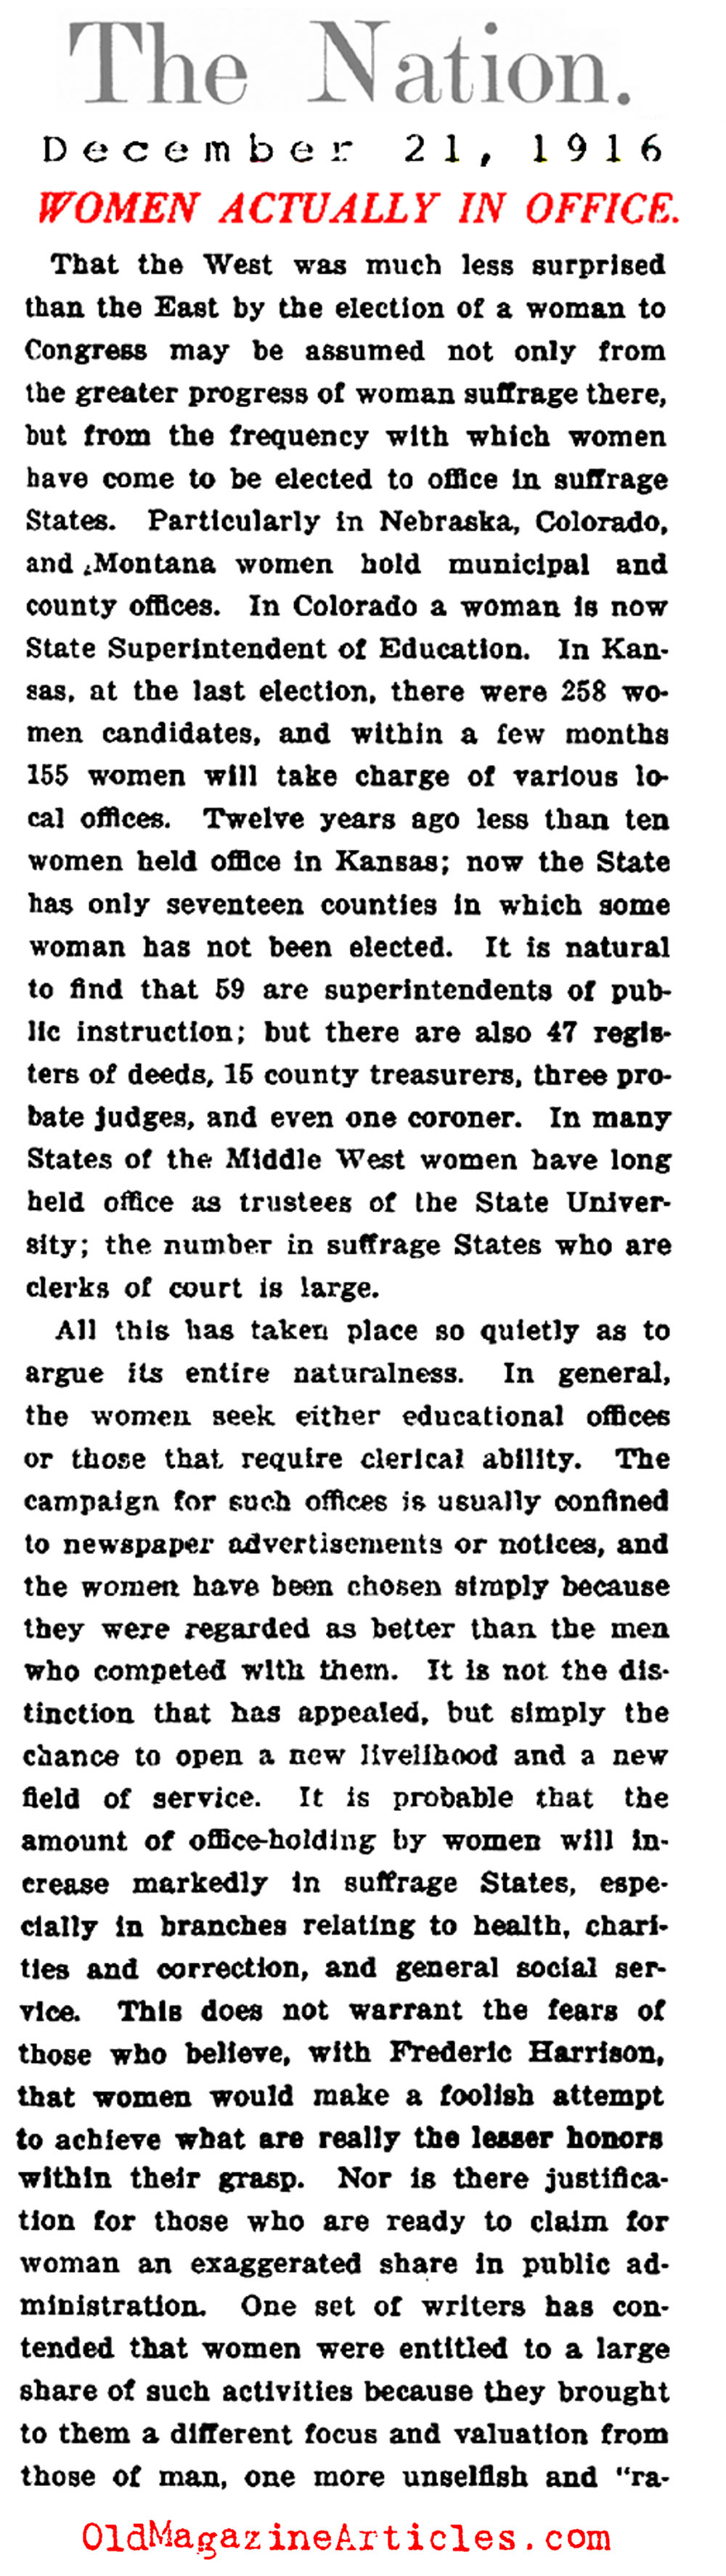 Women Win Office in 1916 (The Nation, 1916)